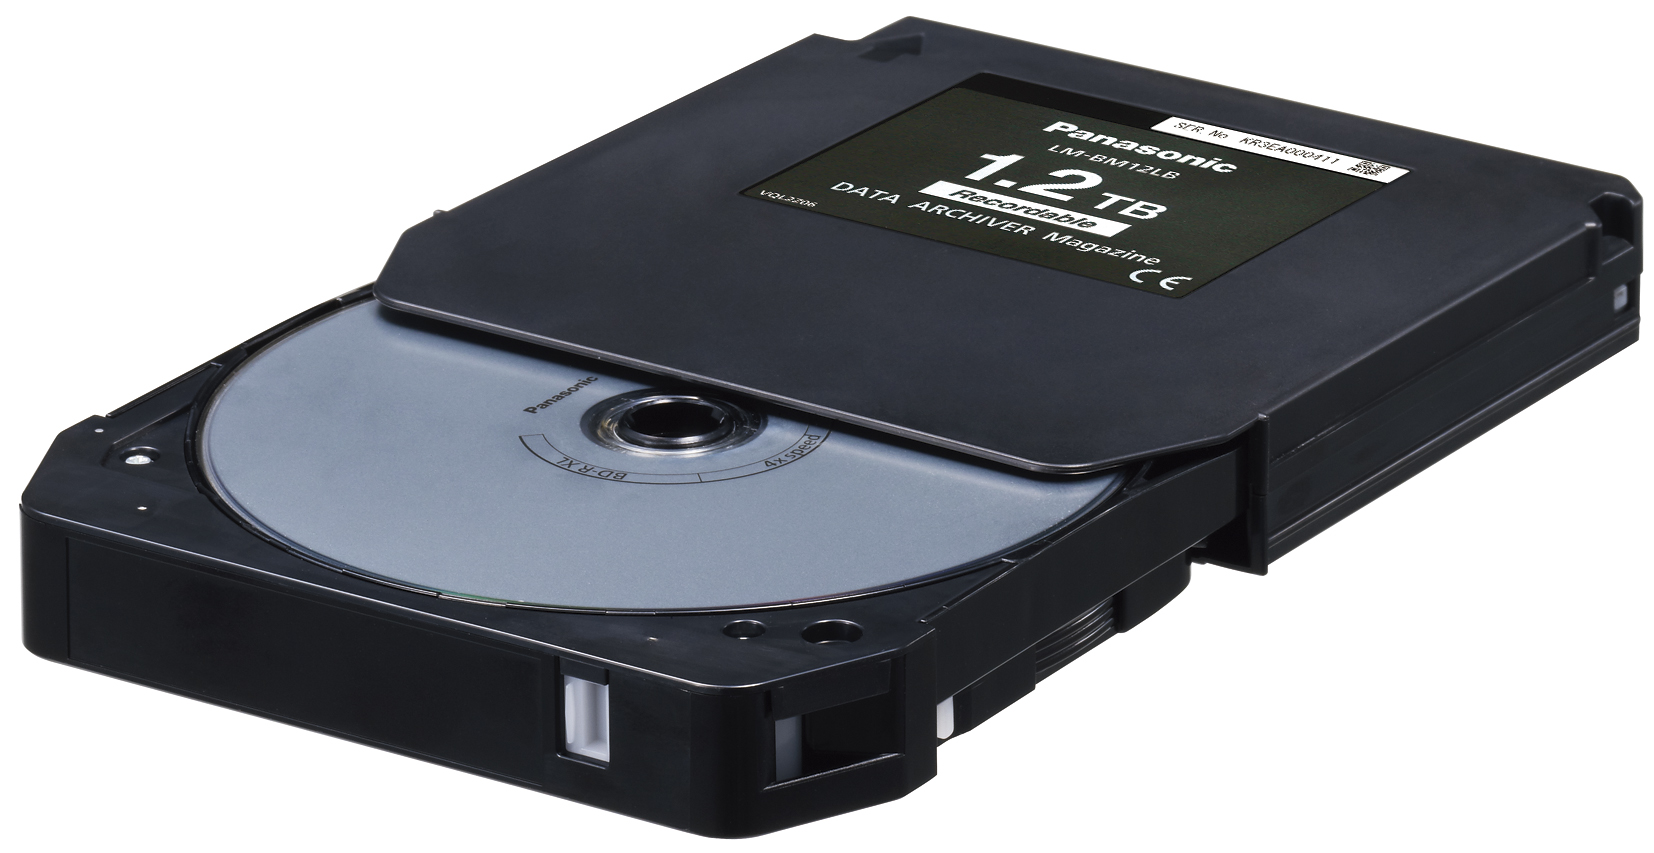 “Blu-ray data archiver” ยุคใหม่แห่งการเก็บข้อมูลจาก Panasonic